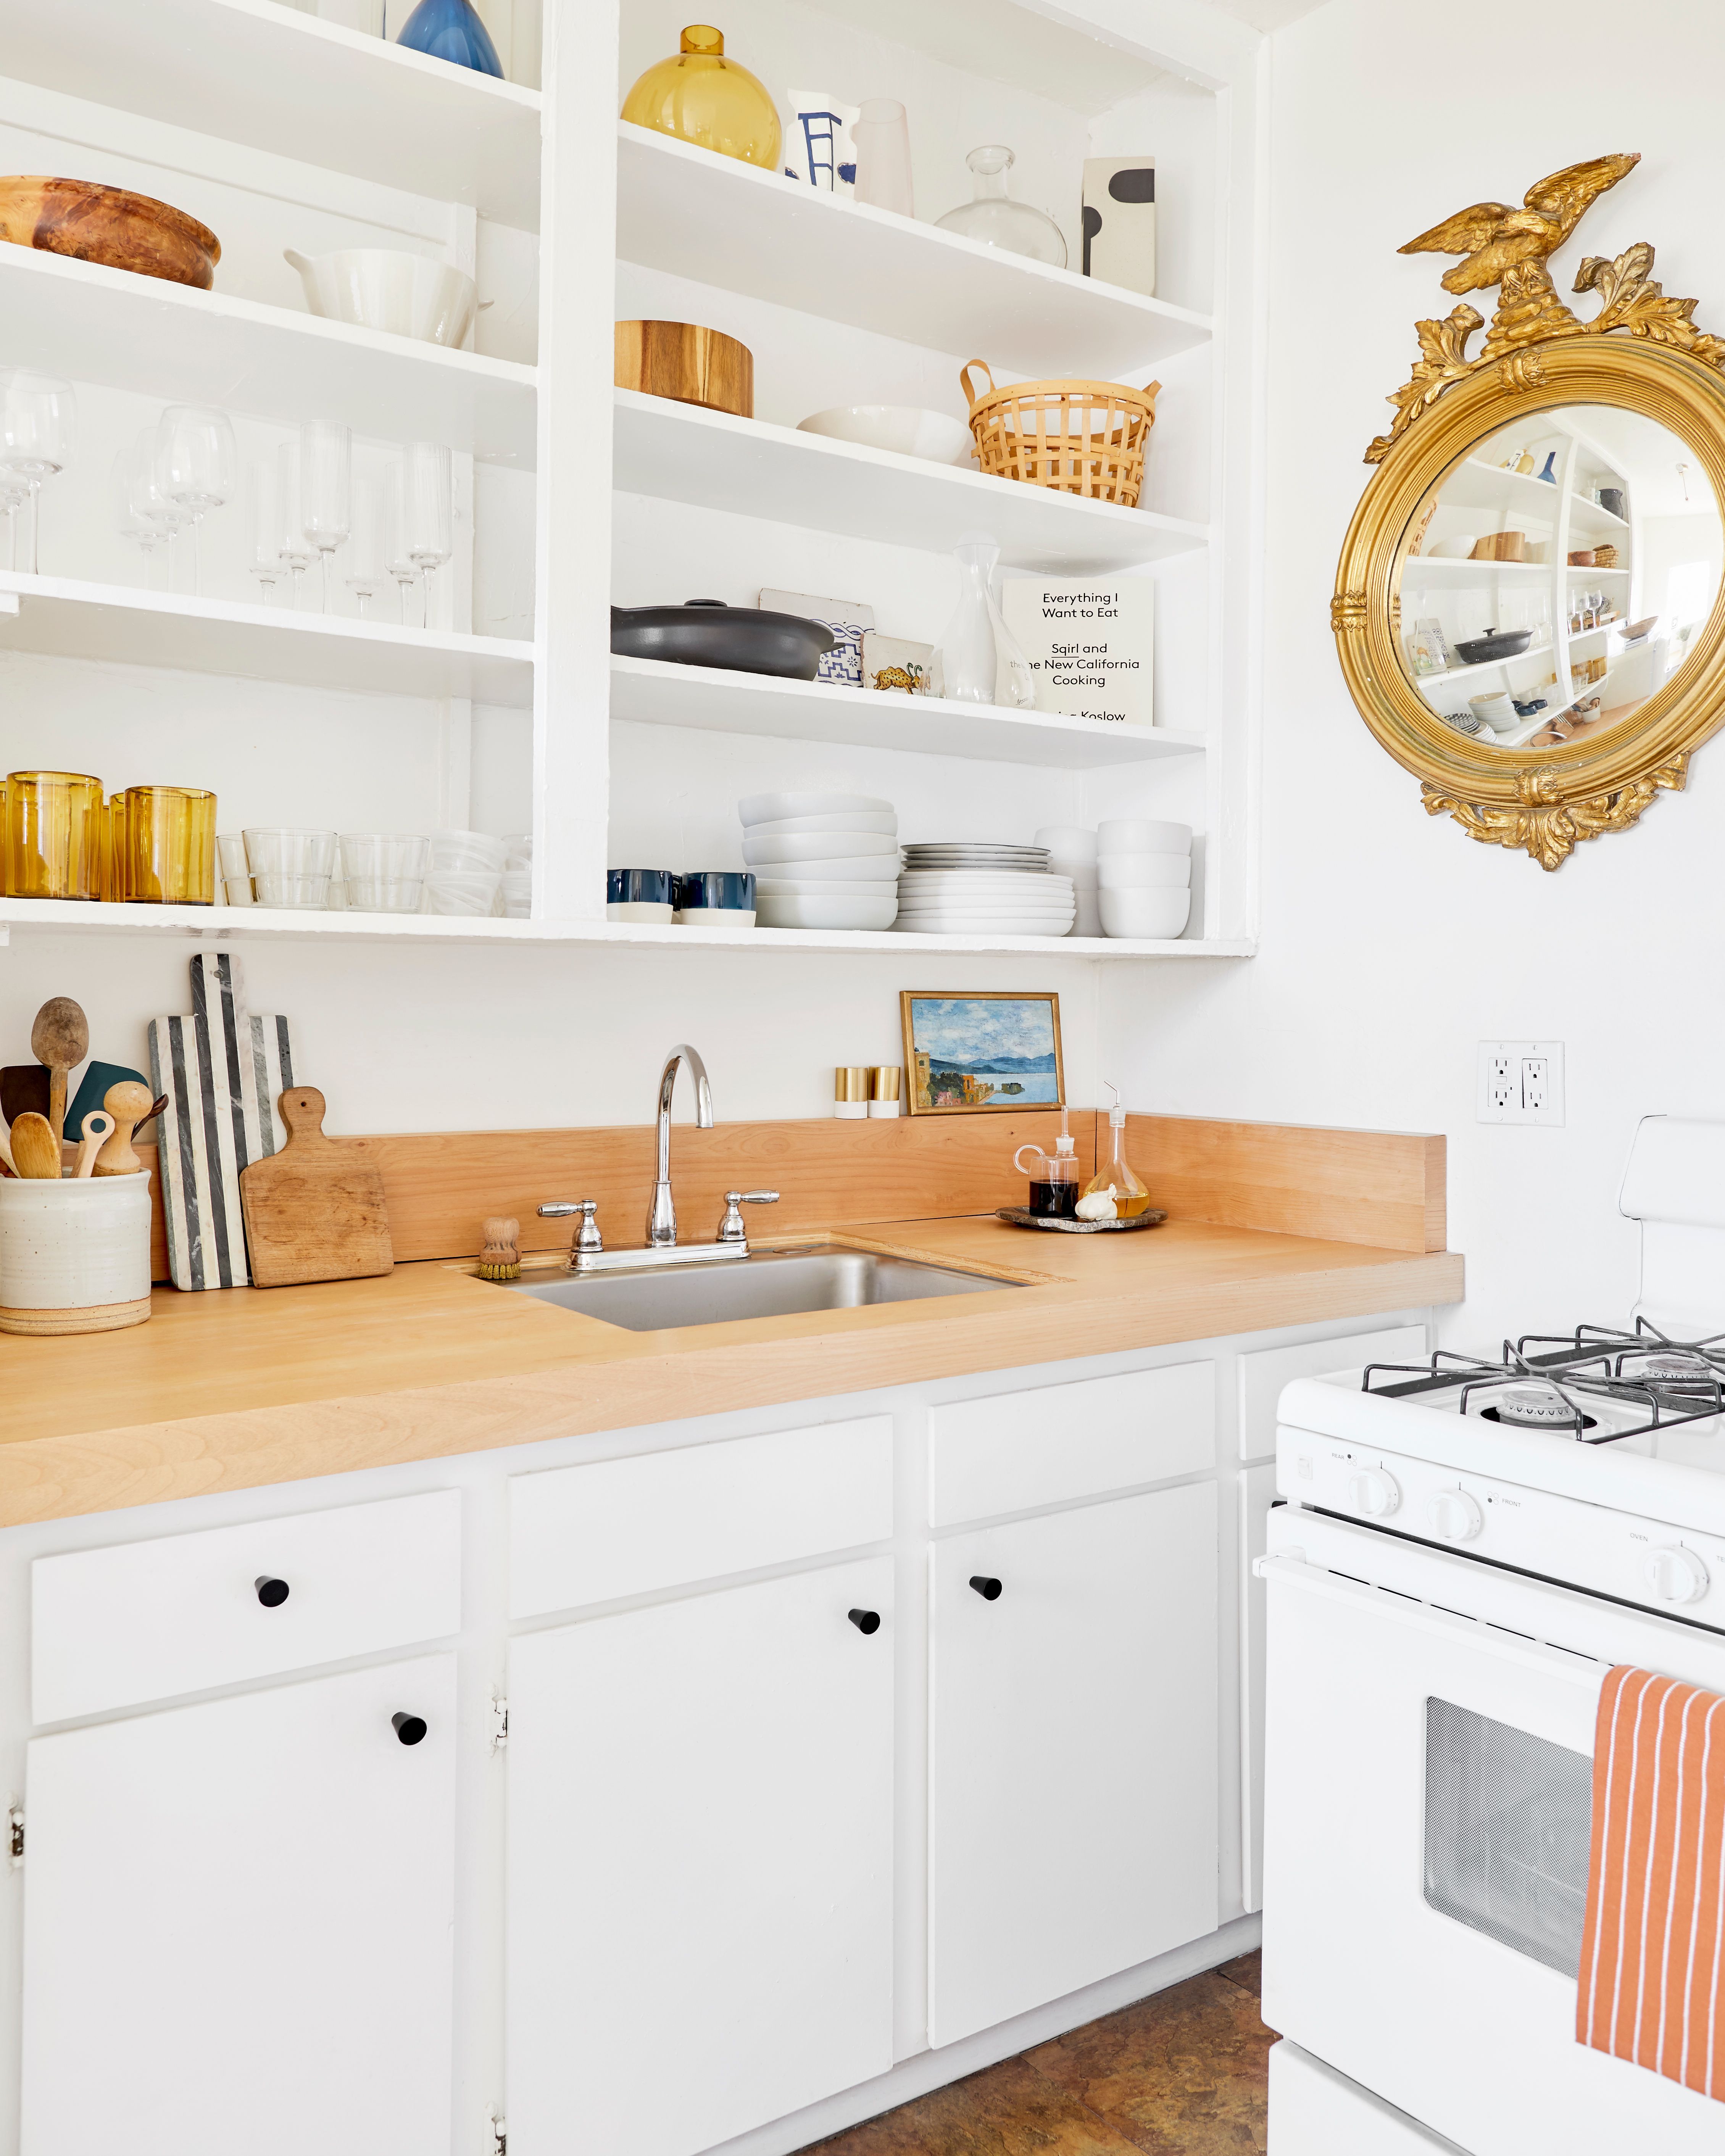 20 Best Small Kitchen Design Ideas   Small Kitchen Layout Photos